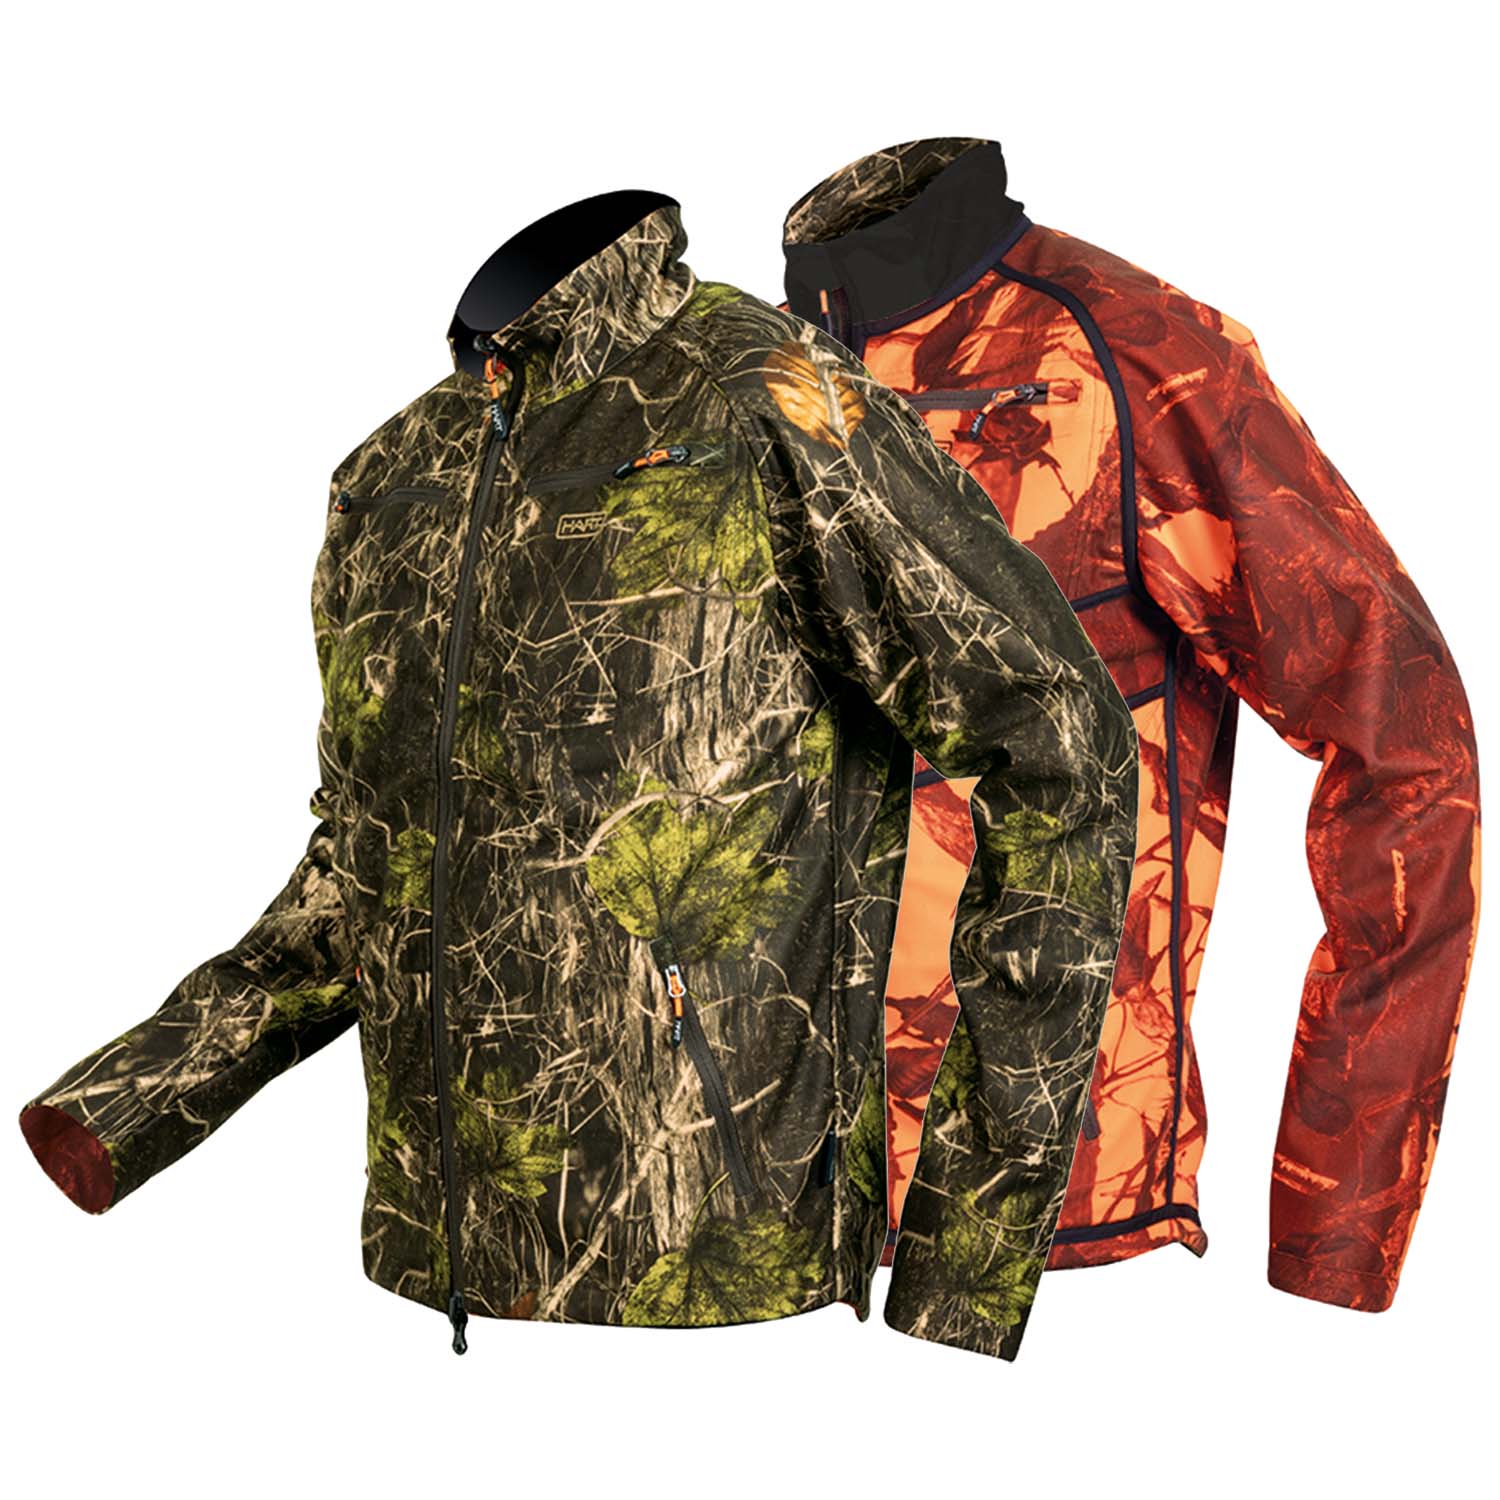 Hart reversible jacket Sosbun - Hunting Jackets